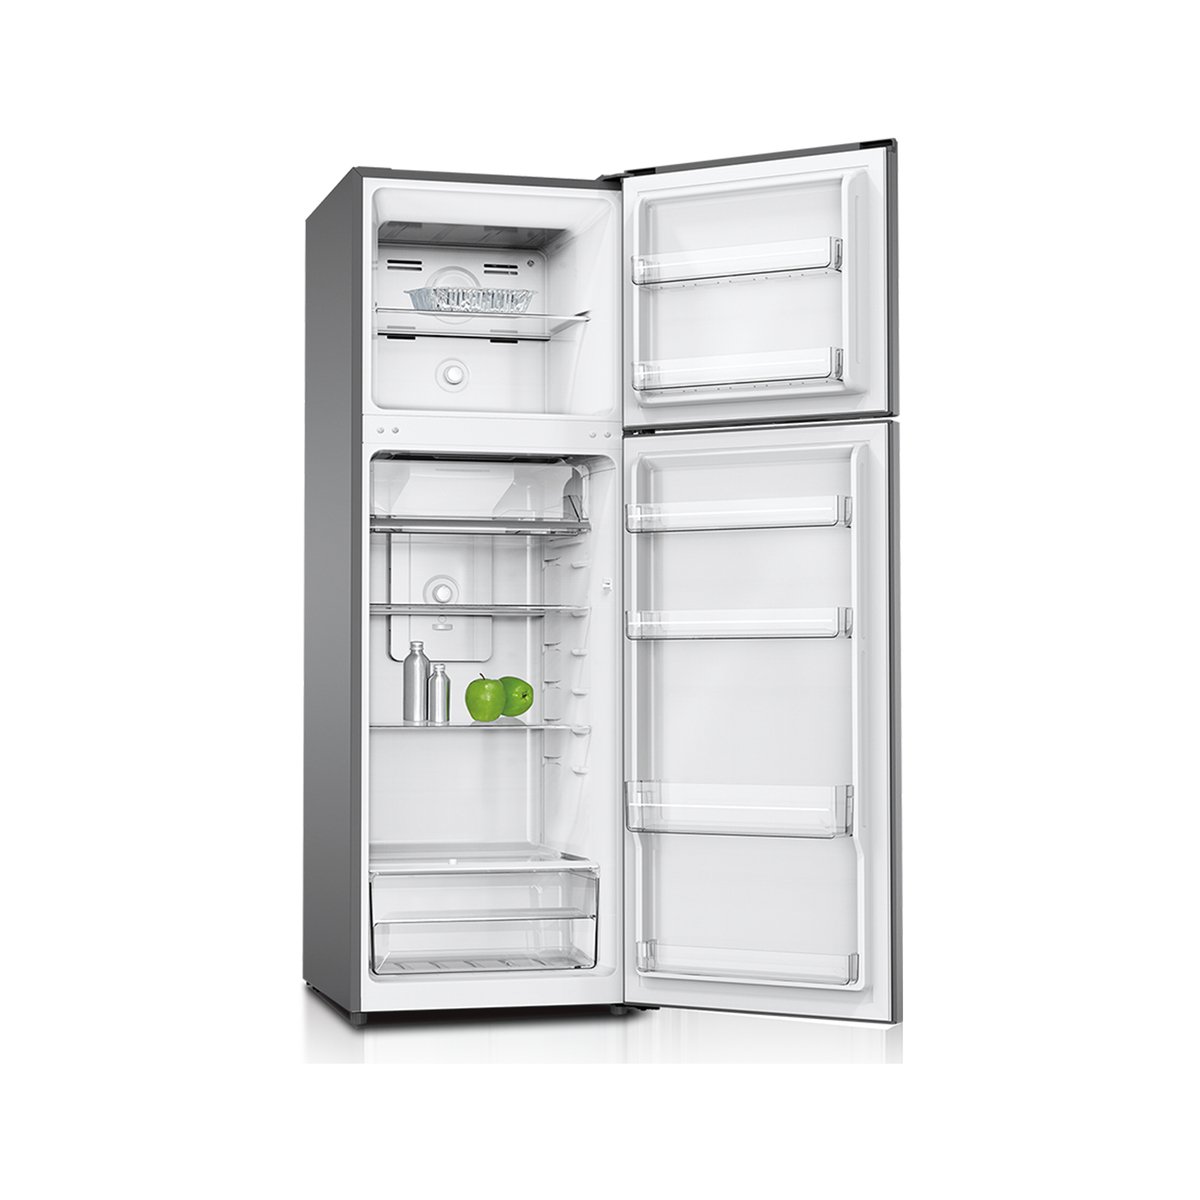 Super General 251 Ltr Double Door Refrigerator, Inox, SGR360i